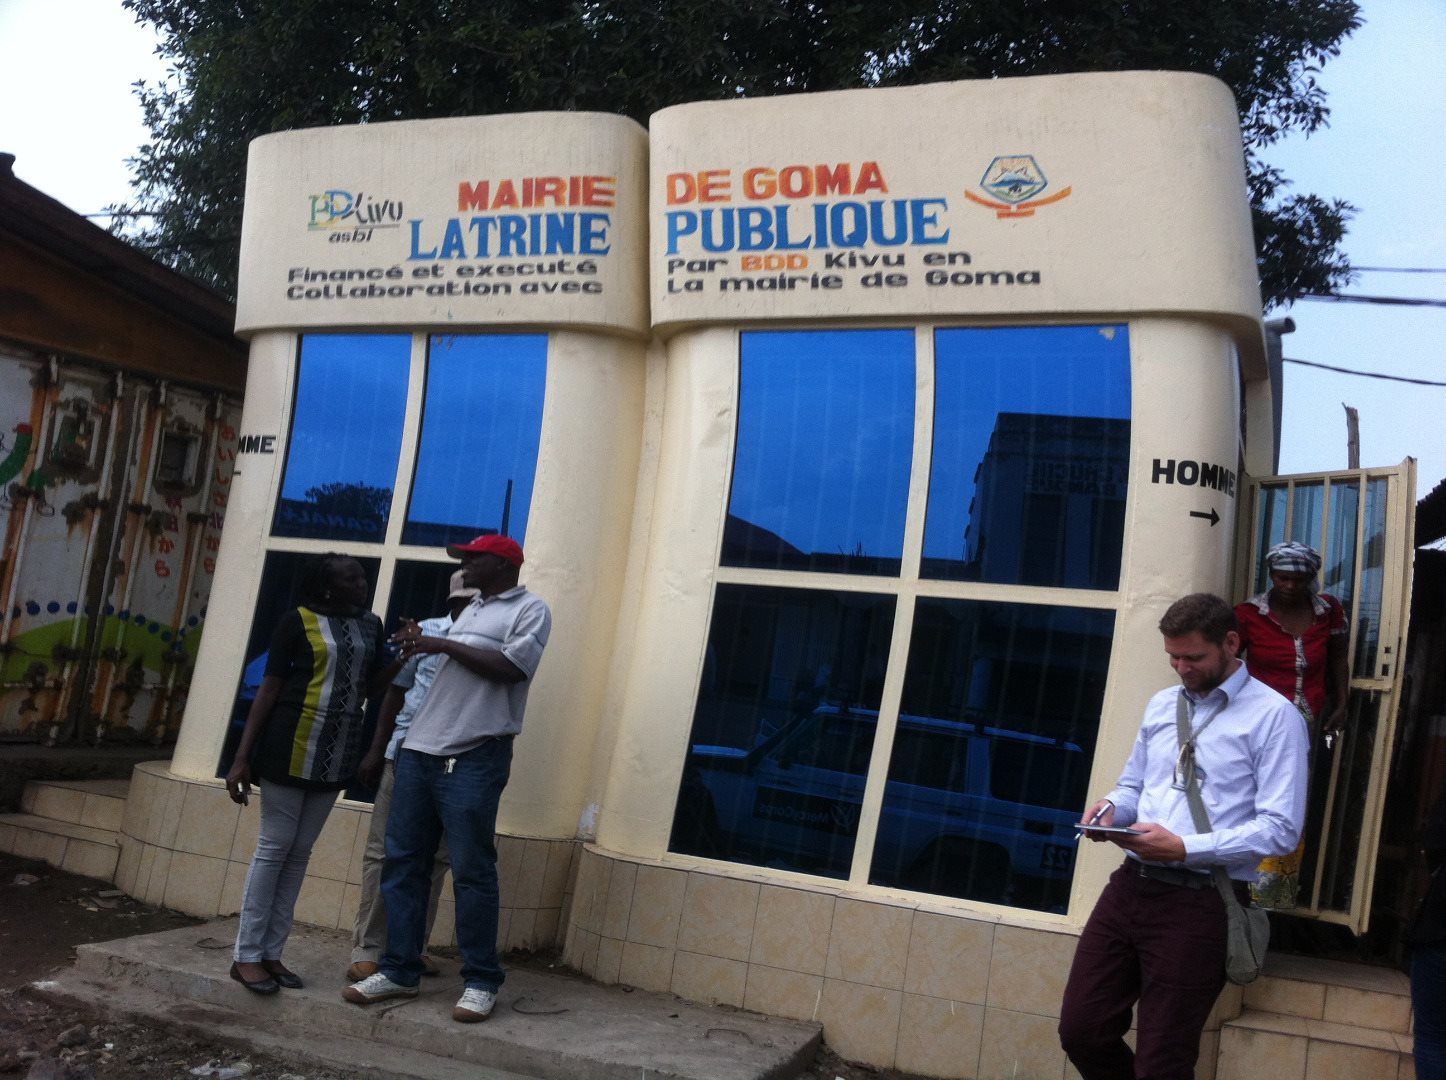 Public toilet in urban setting in DRC